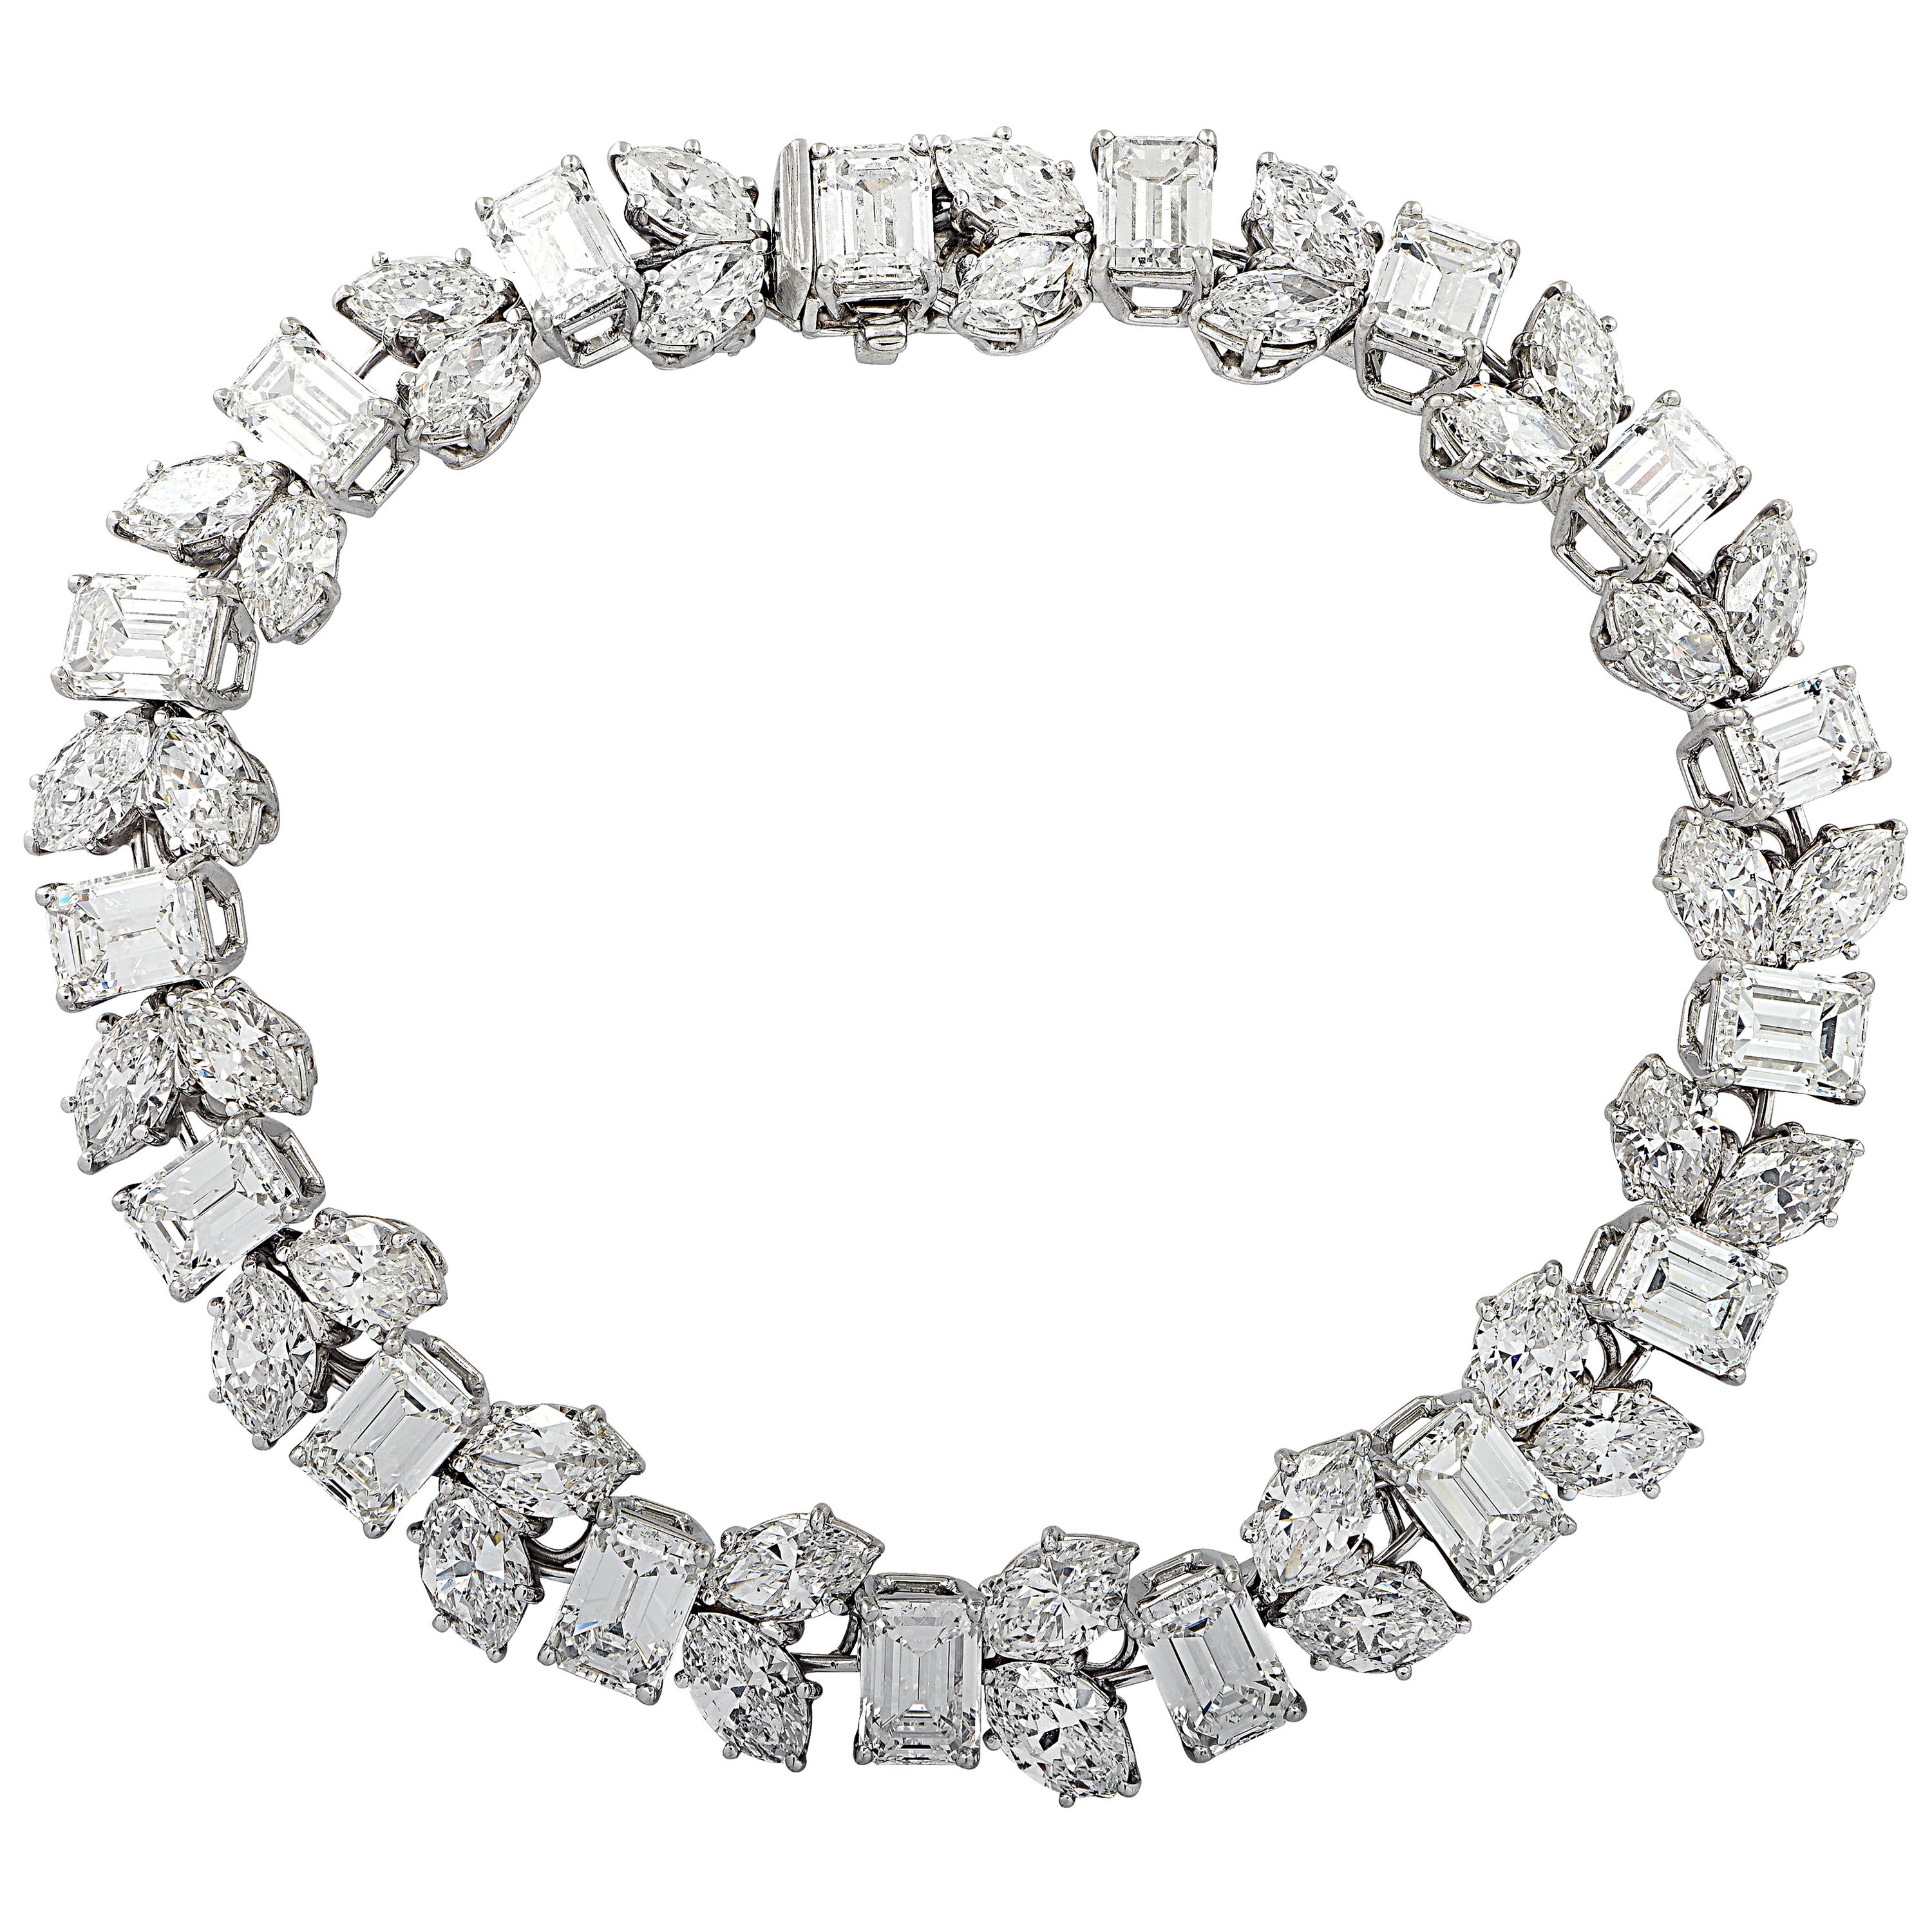 Harry Winston 24.17 Carat Diamond Bracelet